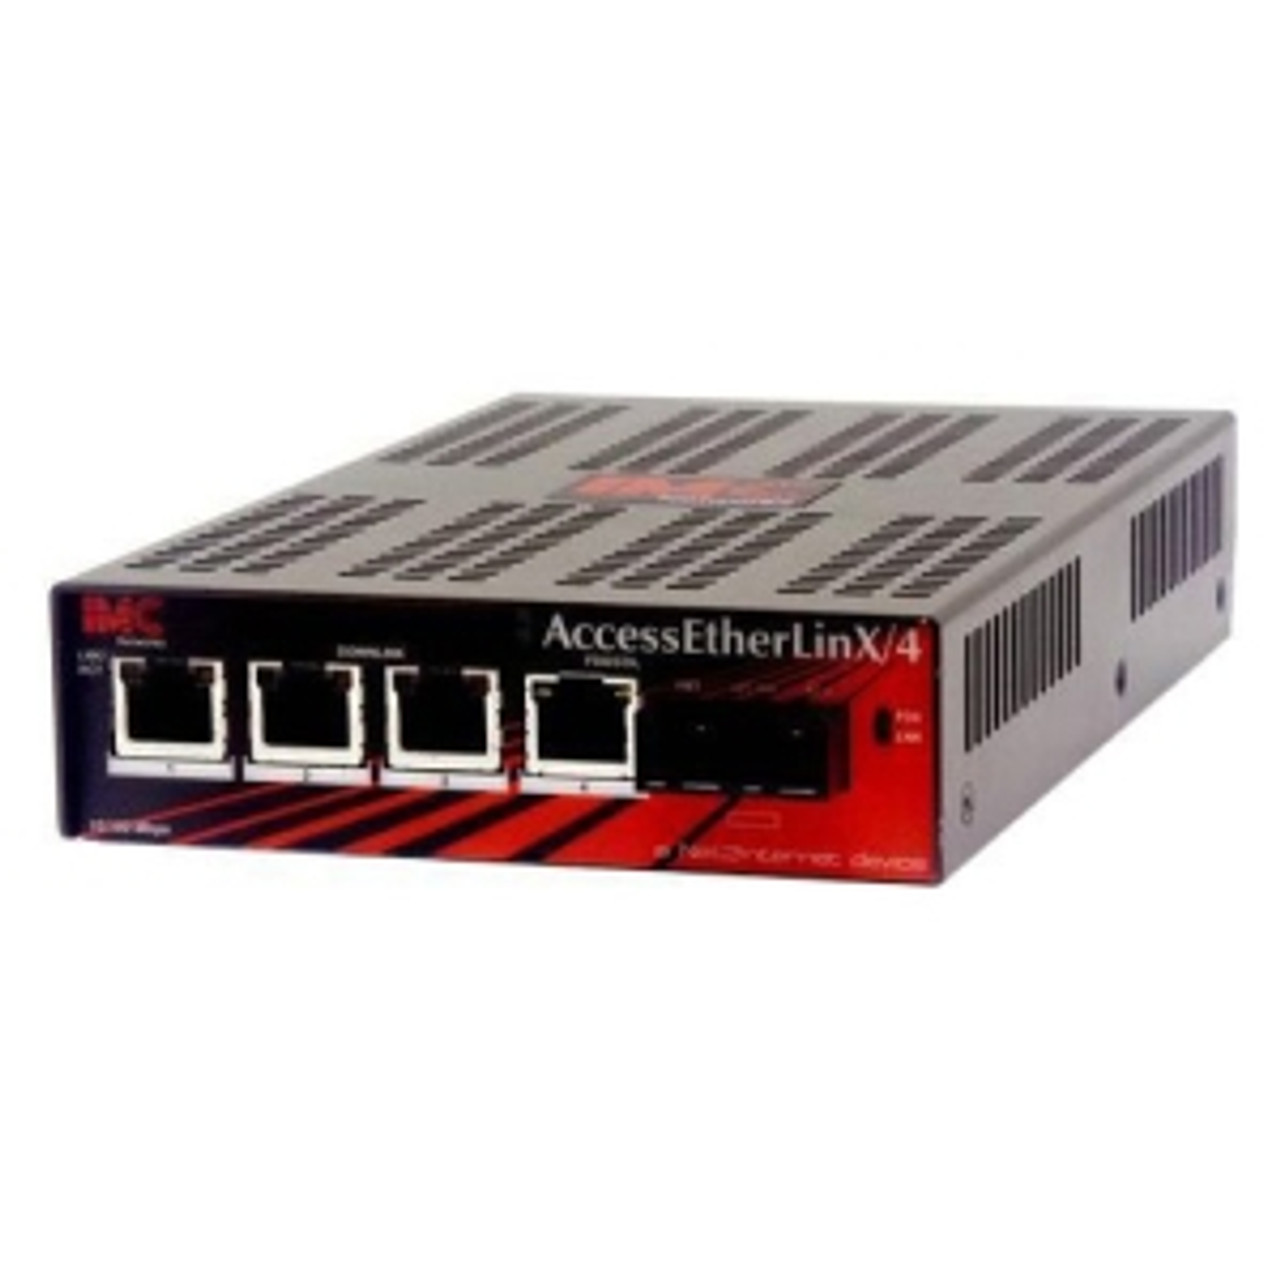 852-10084 IMC AccessEtherLinX/4 852-10084 Ethernet Switch 5 Ports Manageable 4 x RJ-45 1 x SC 10/100Base-TX, 100Base-FX